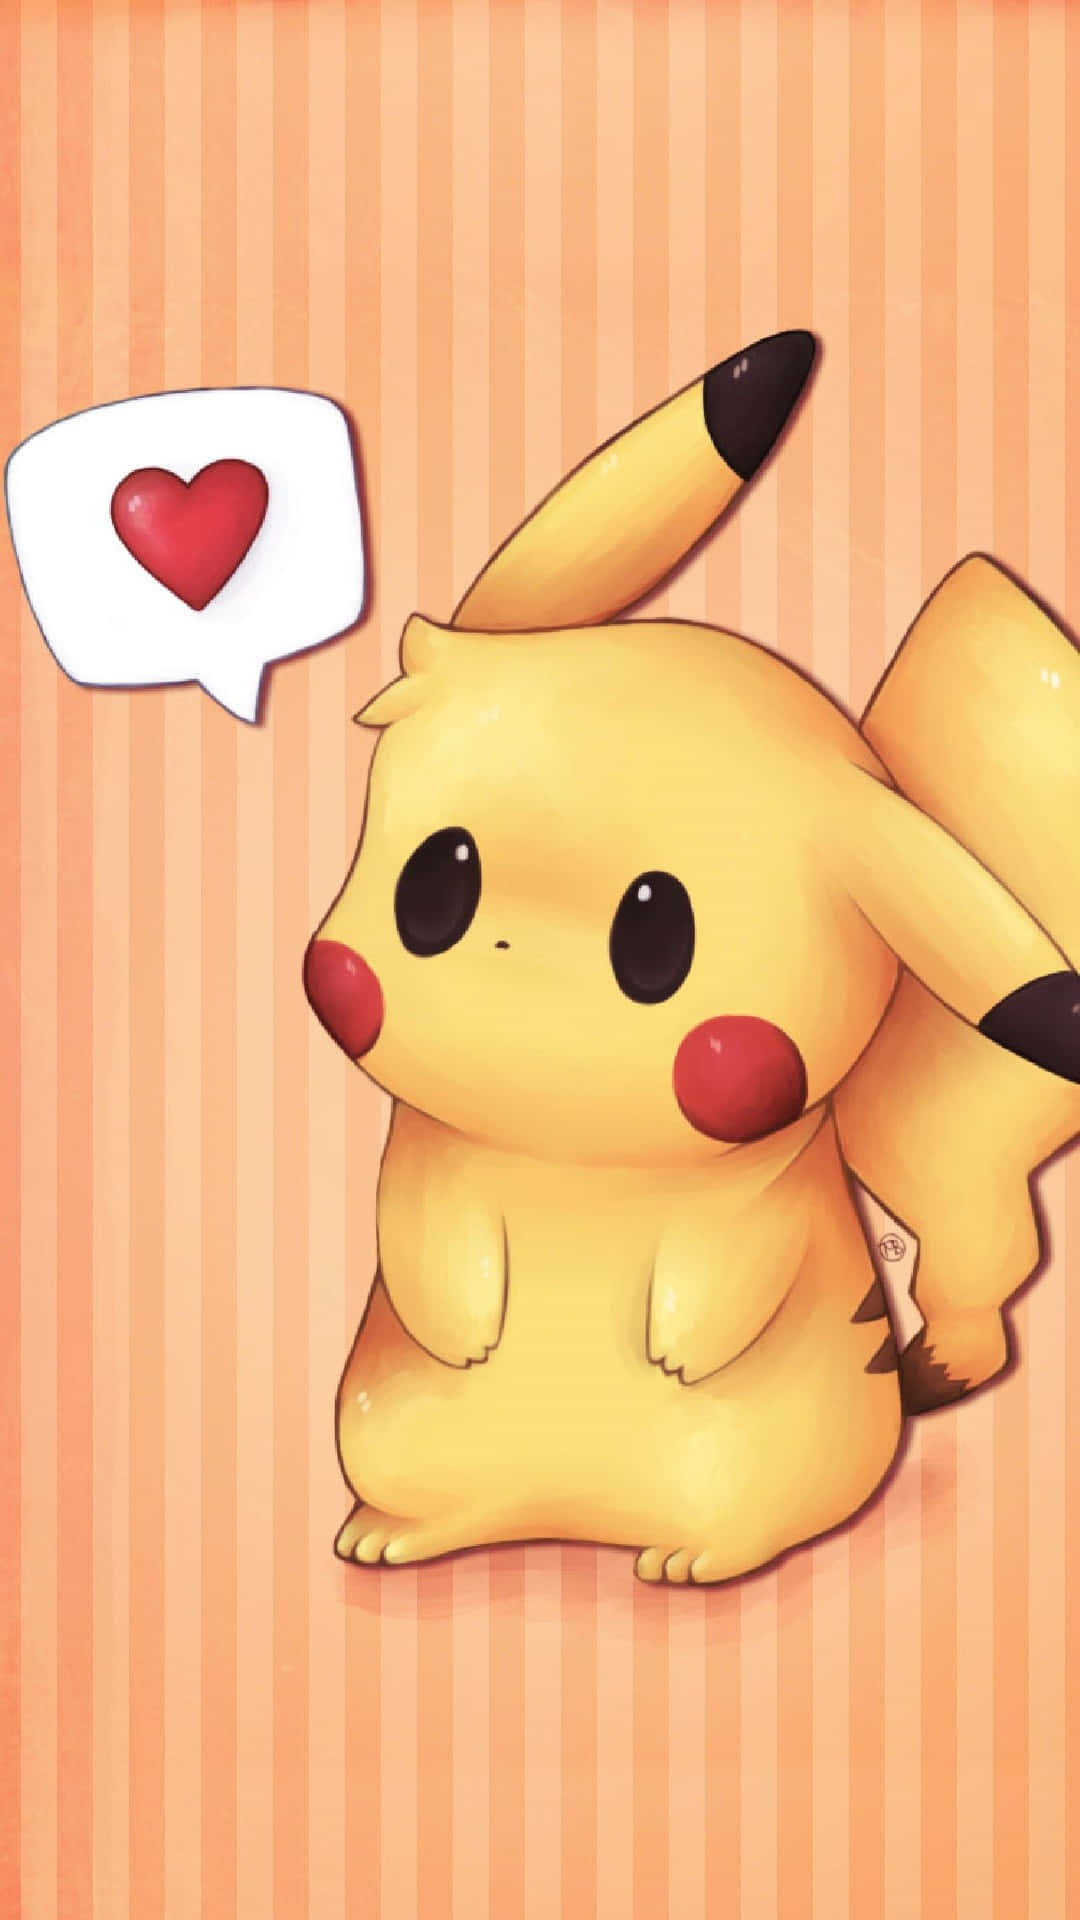 100+] Cute Baby Pikachu Wallpapers | Wallpapers.com